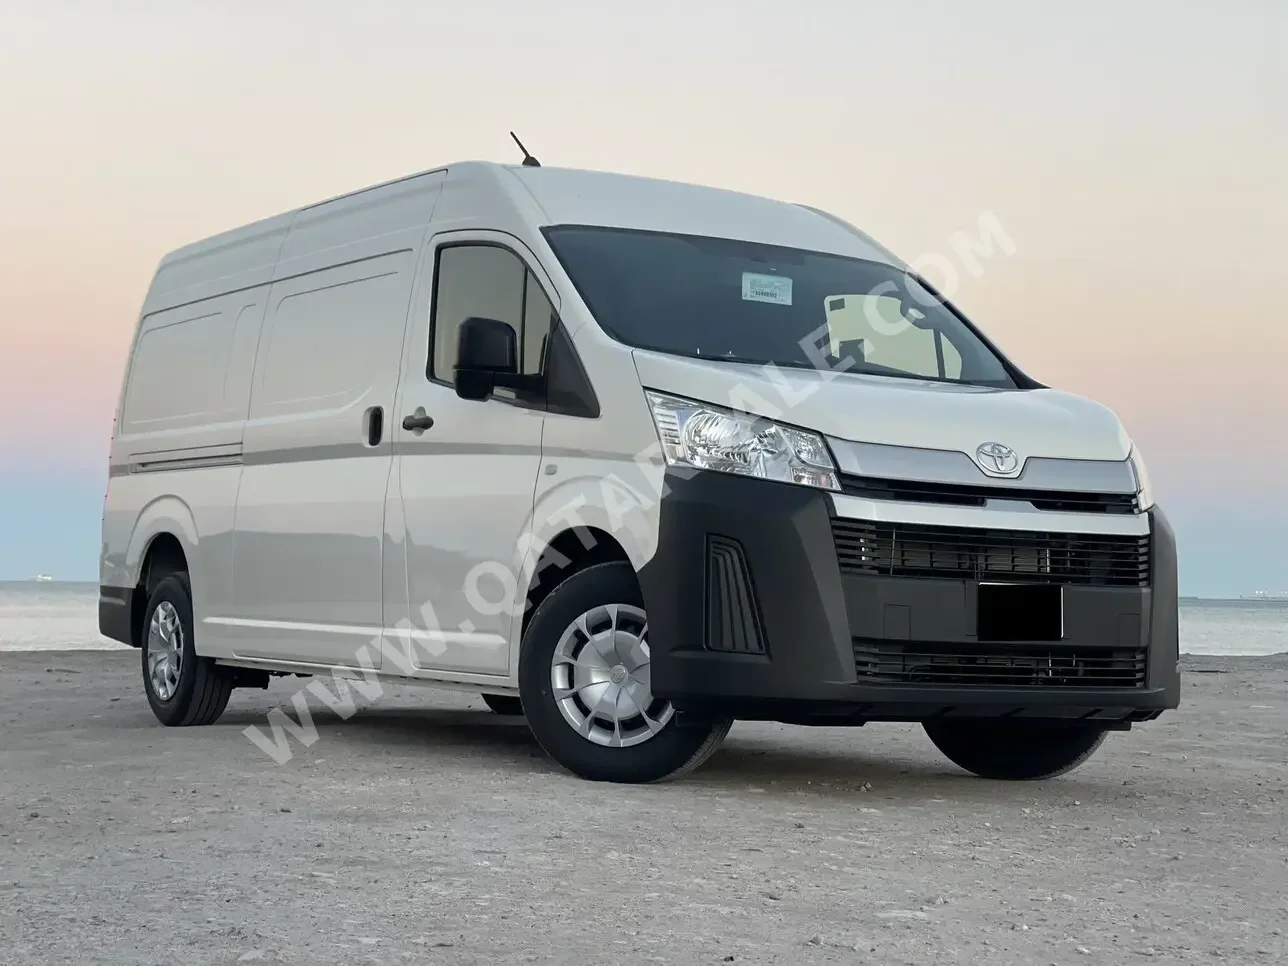 Toyota  Hiace  2024  Manual  0 Km  4 Cylinder  Rear Wheel Drive (RWD)  Van / Bus  White  With Warranty